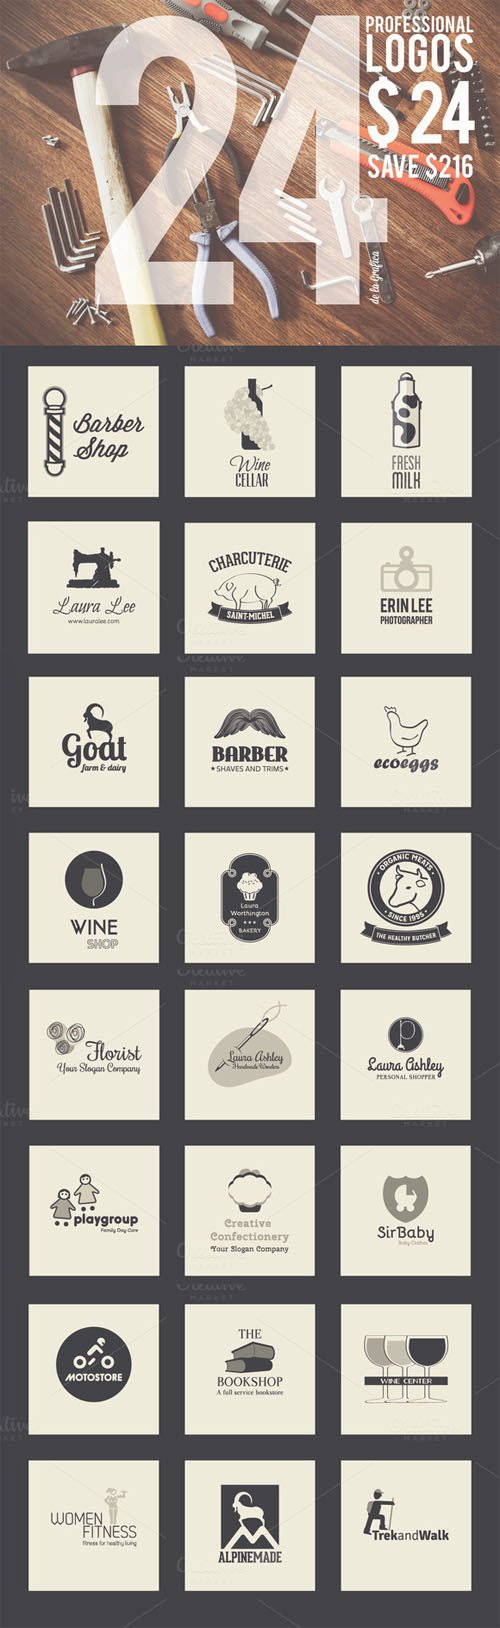 24 Professional Logos Templates - Creativemarket 161376